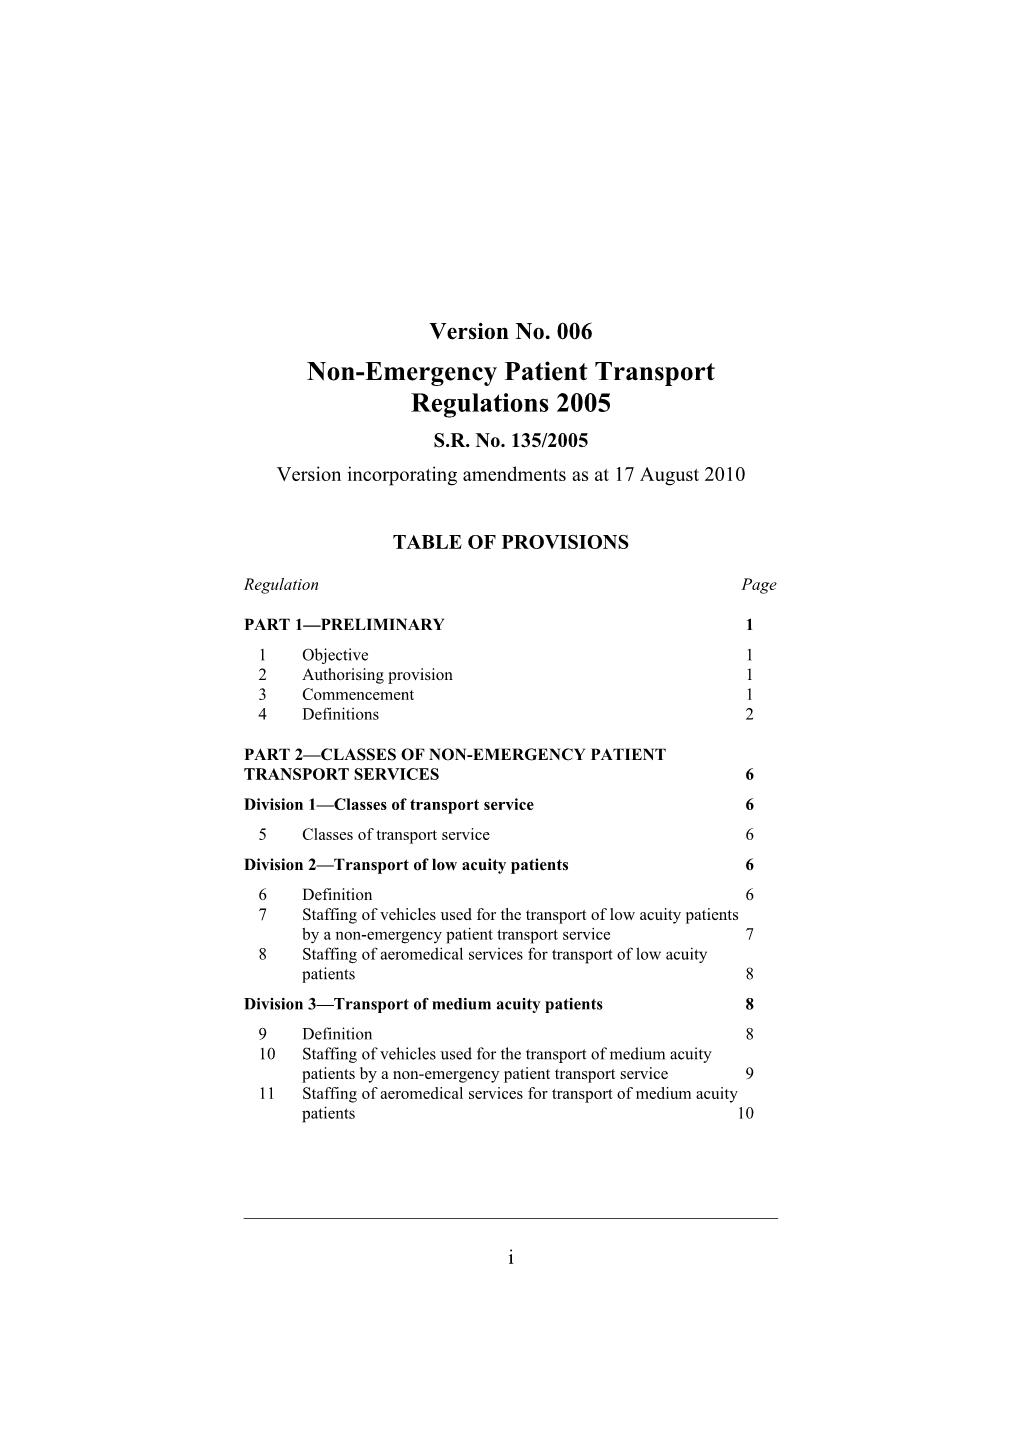 Non-Emergency Patient Transport Regulations 2005